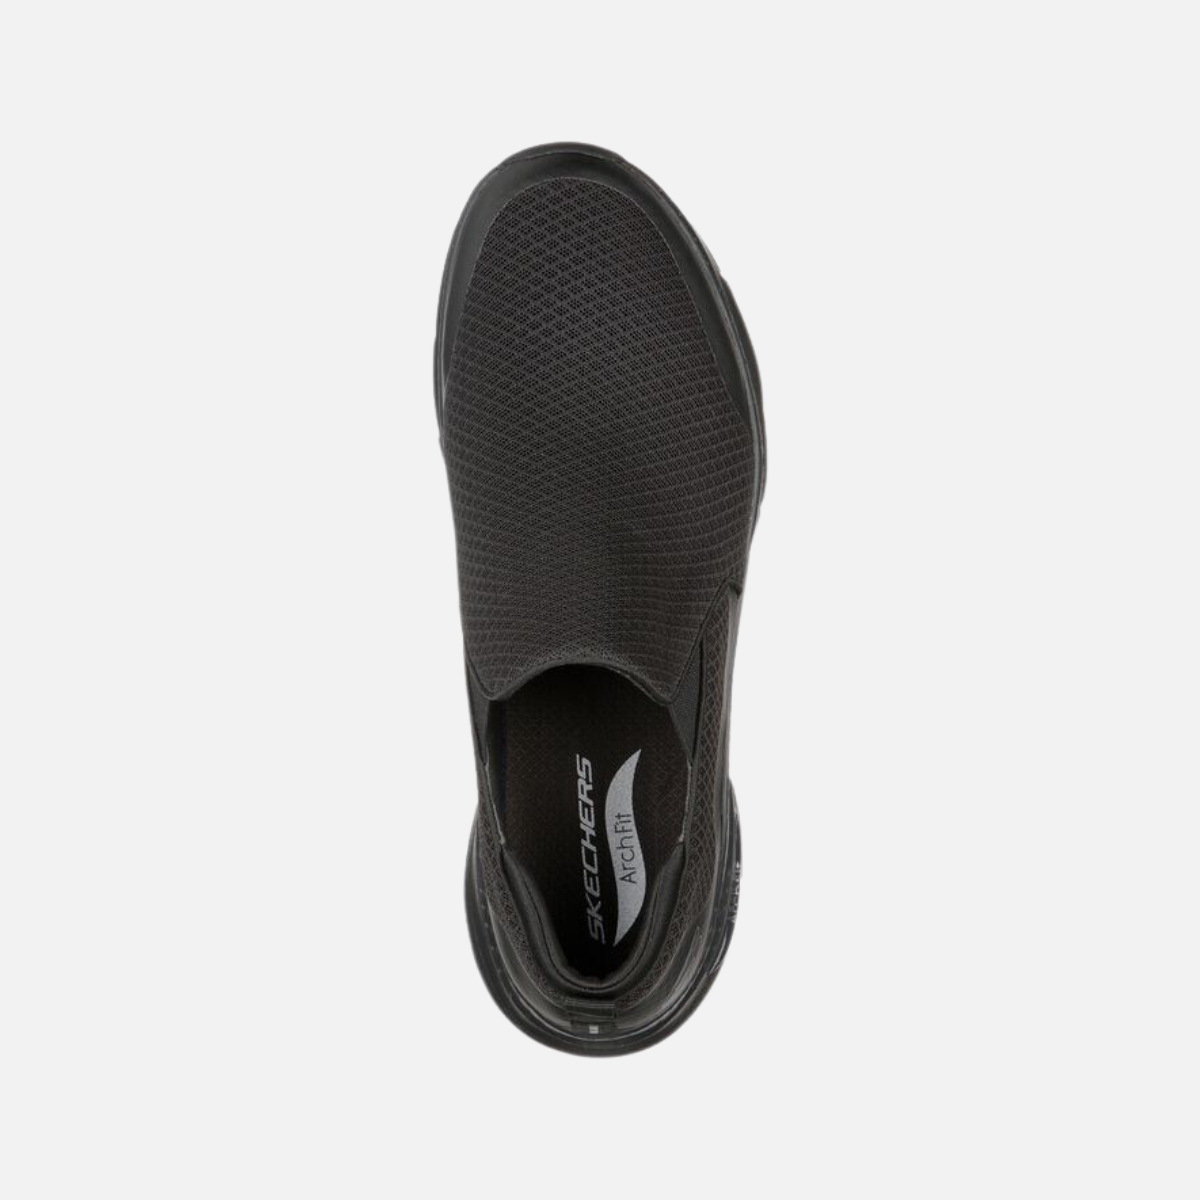 Skechers Arch Fit-Banlin Men's Walking Shoes -Black